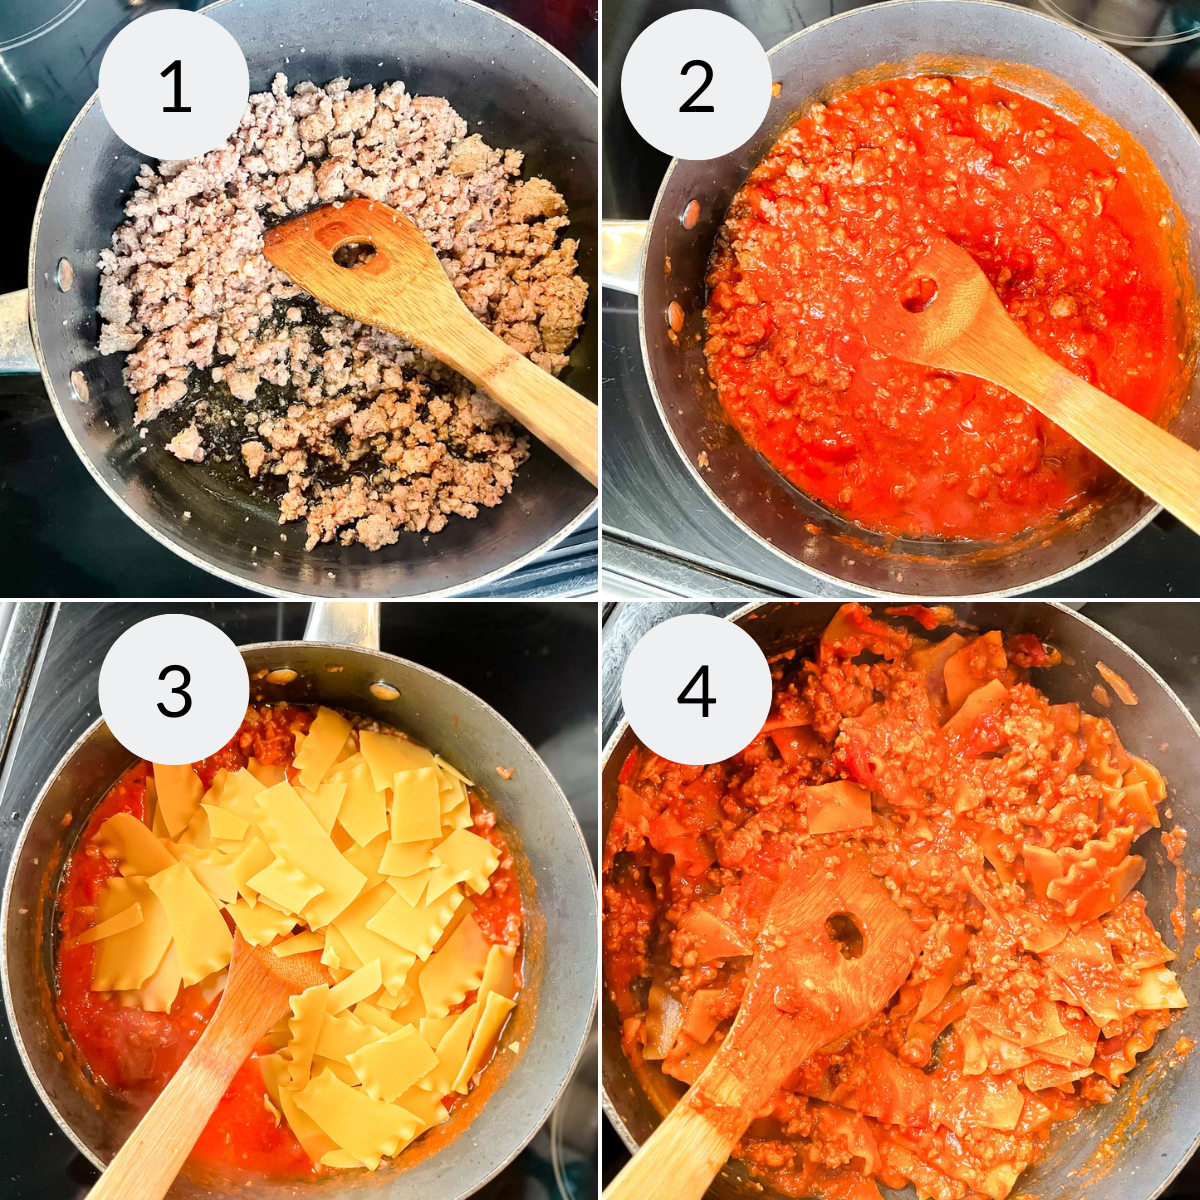 Preparing the ingredients for the skillet lasagna.